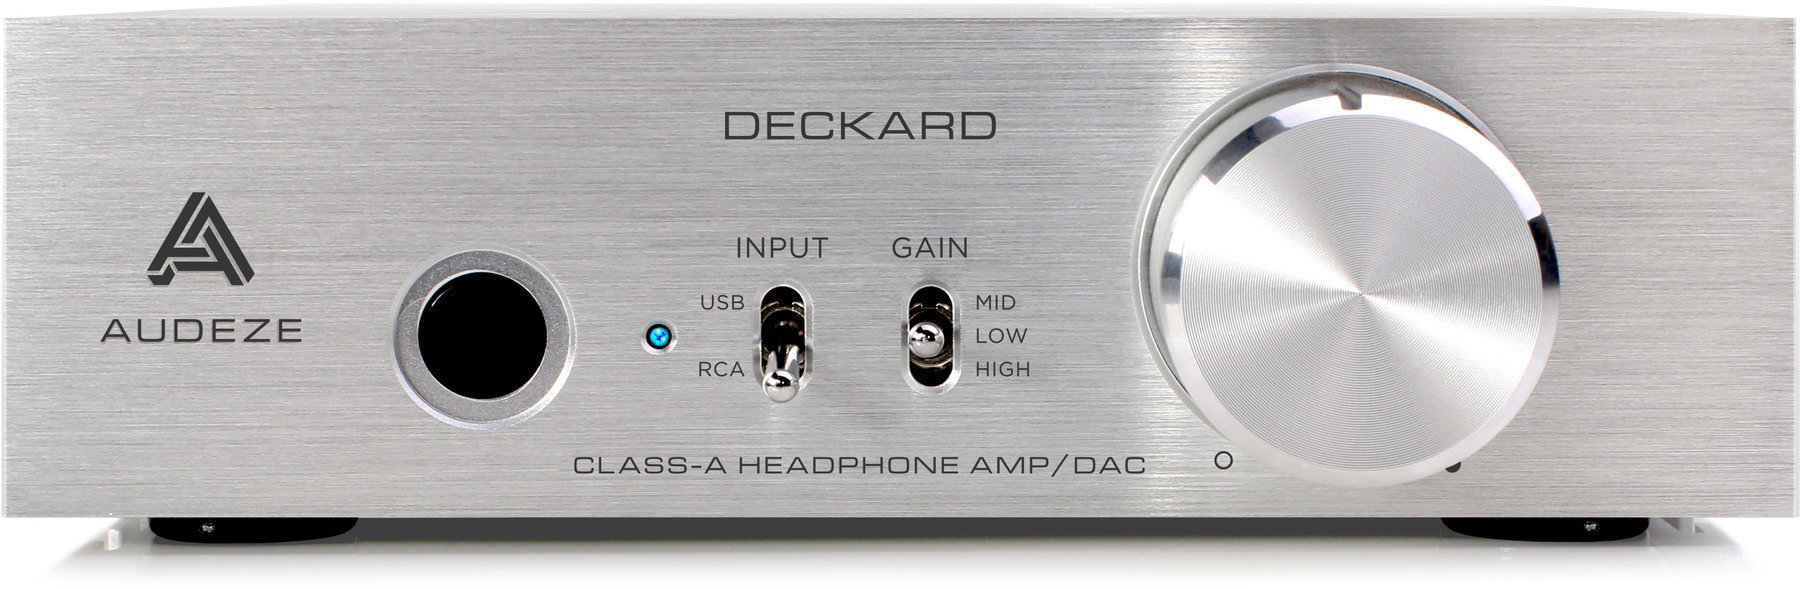 Hi-Fi Headphone Preamp Audeze Deckard